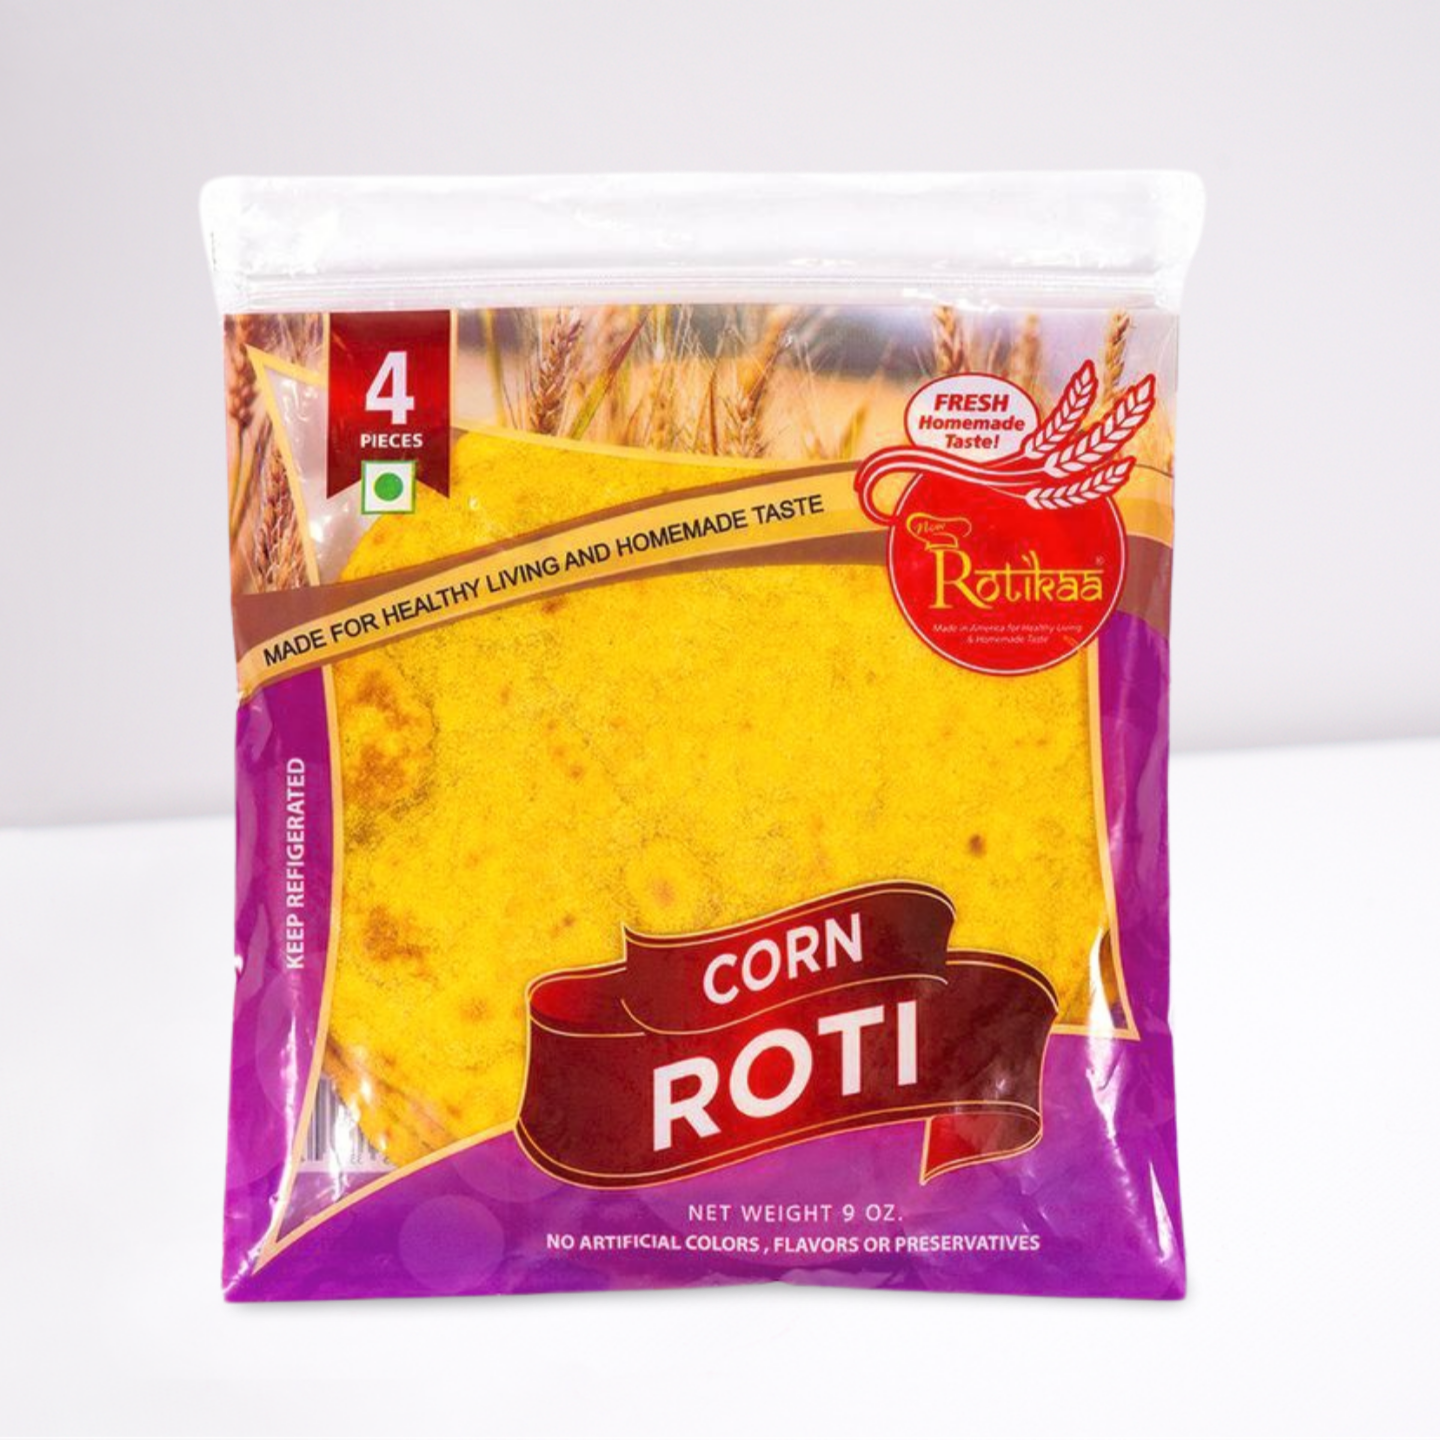 Corn Roti (4 pcs)